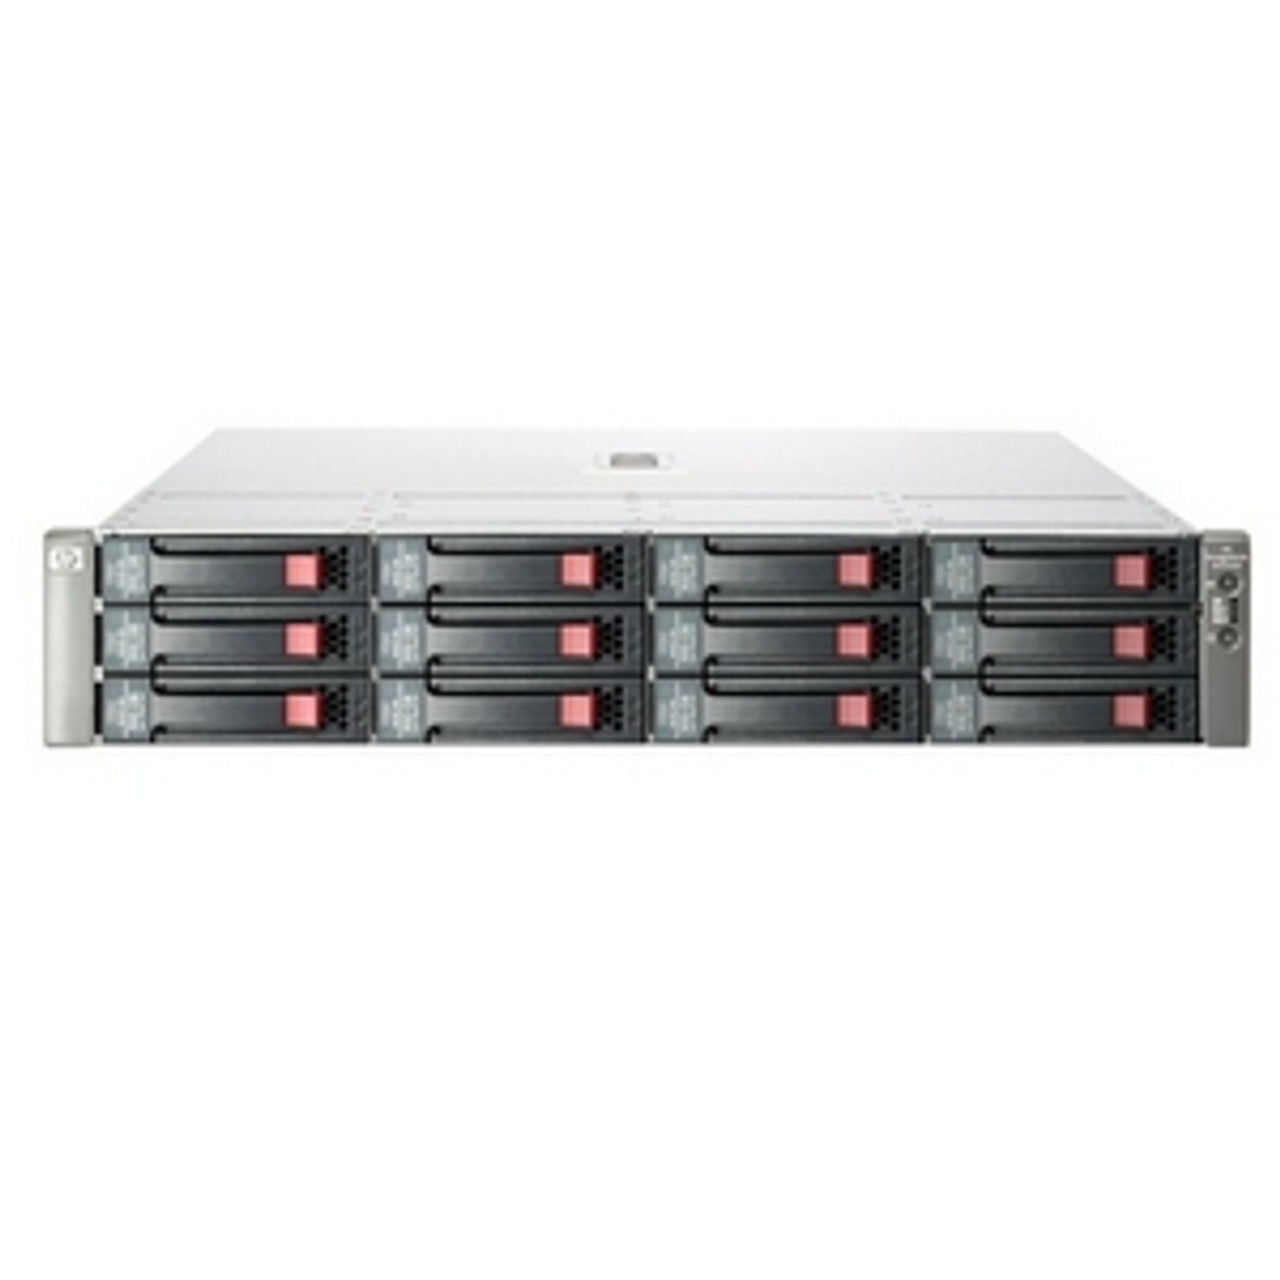 AG658A - HP StorageWorks All-in-One Storage System 1 x Intel Xeon 2.67GHz 1.7TB Network